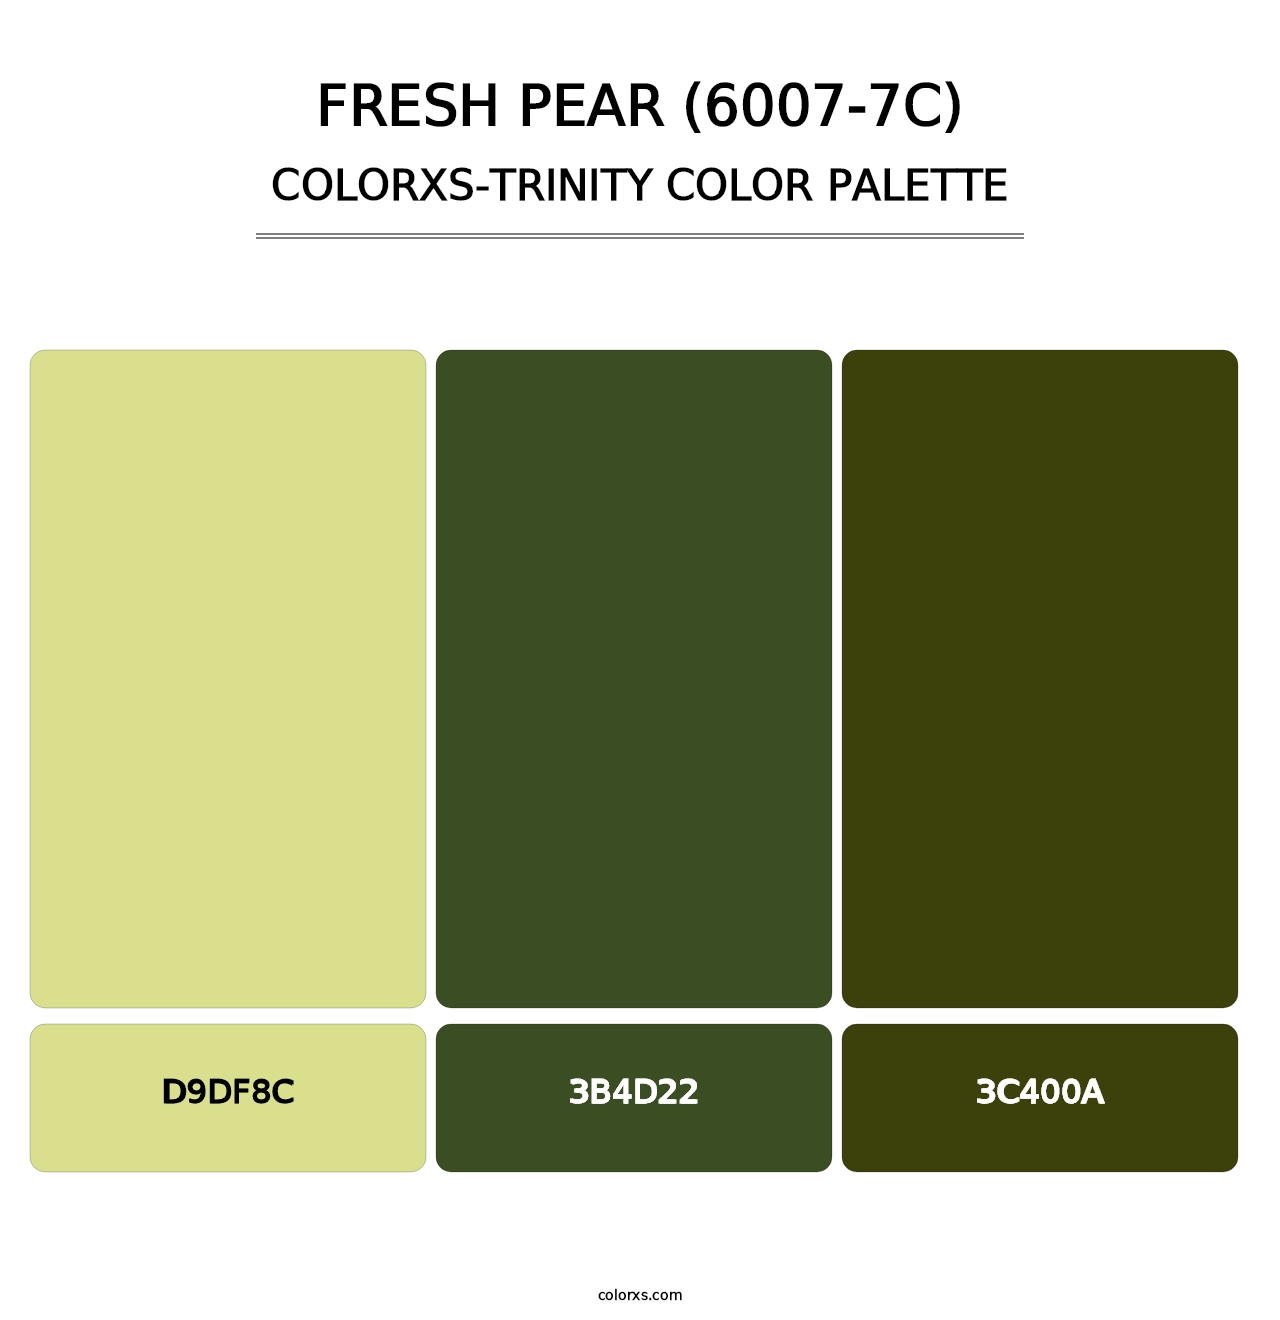 Fresh Pear (6007-7C) - Colorxs Trinity Palette